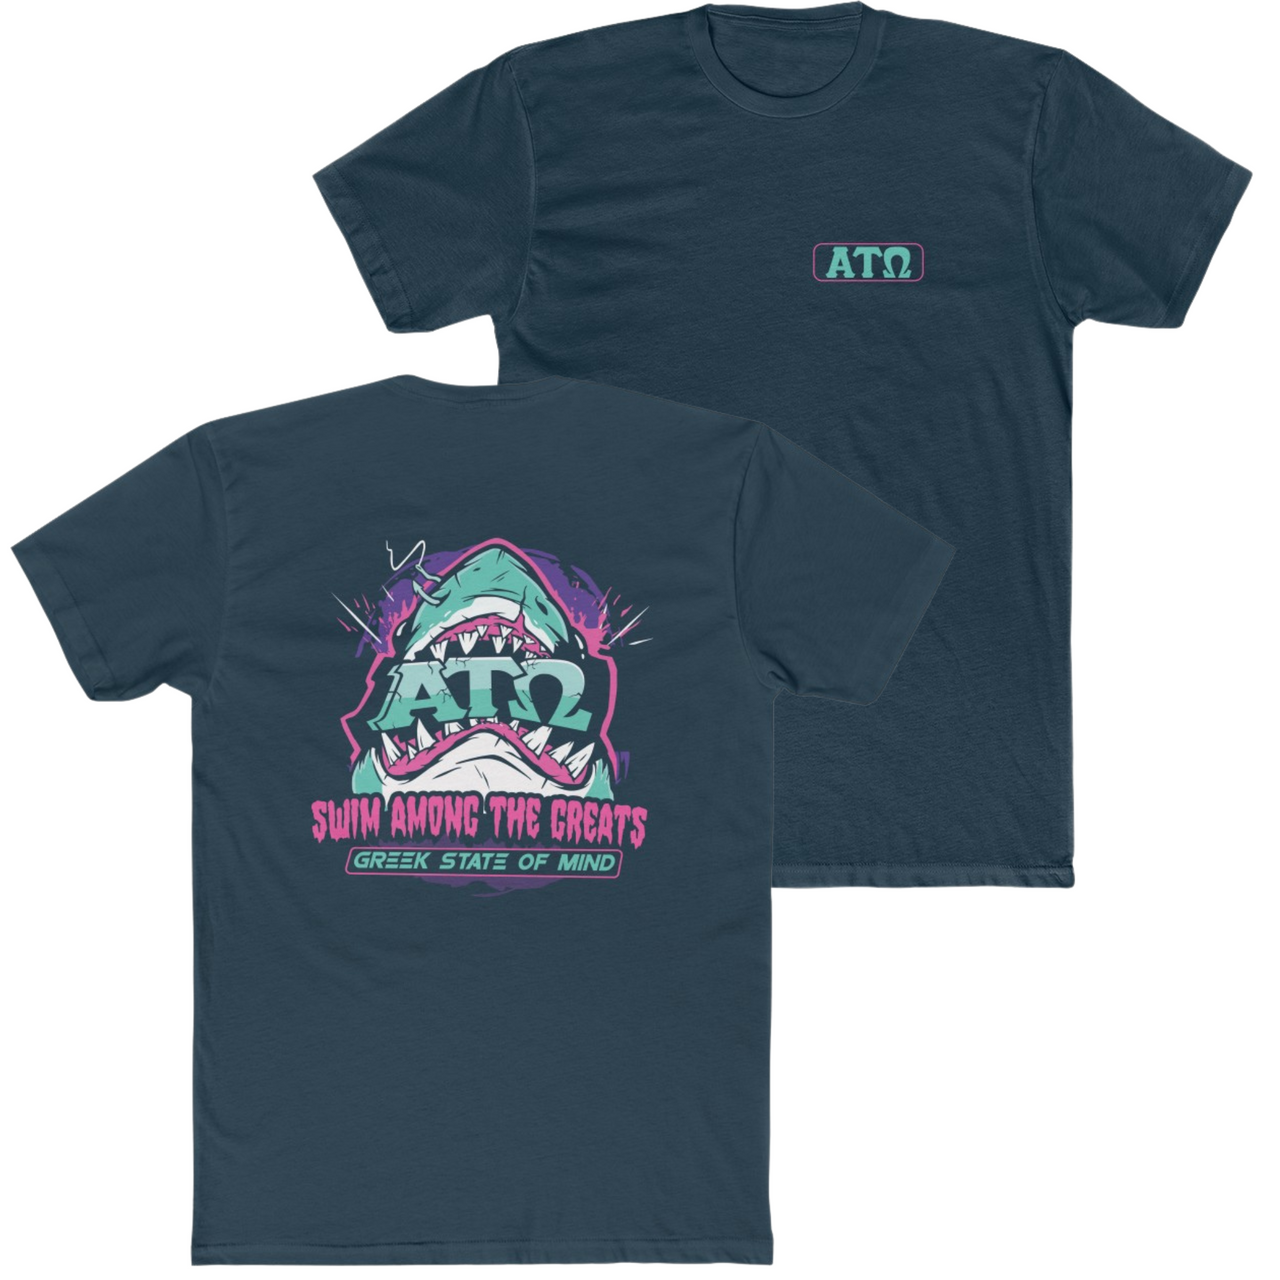 Navy Alpha Tau Omega Graphic T-Shirt | The Deep End | Alpha Tau Omega Apparel 